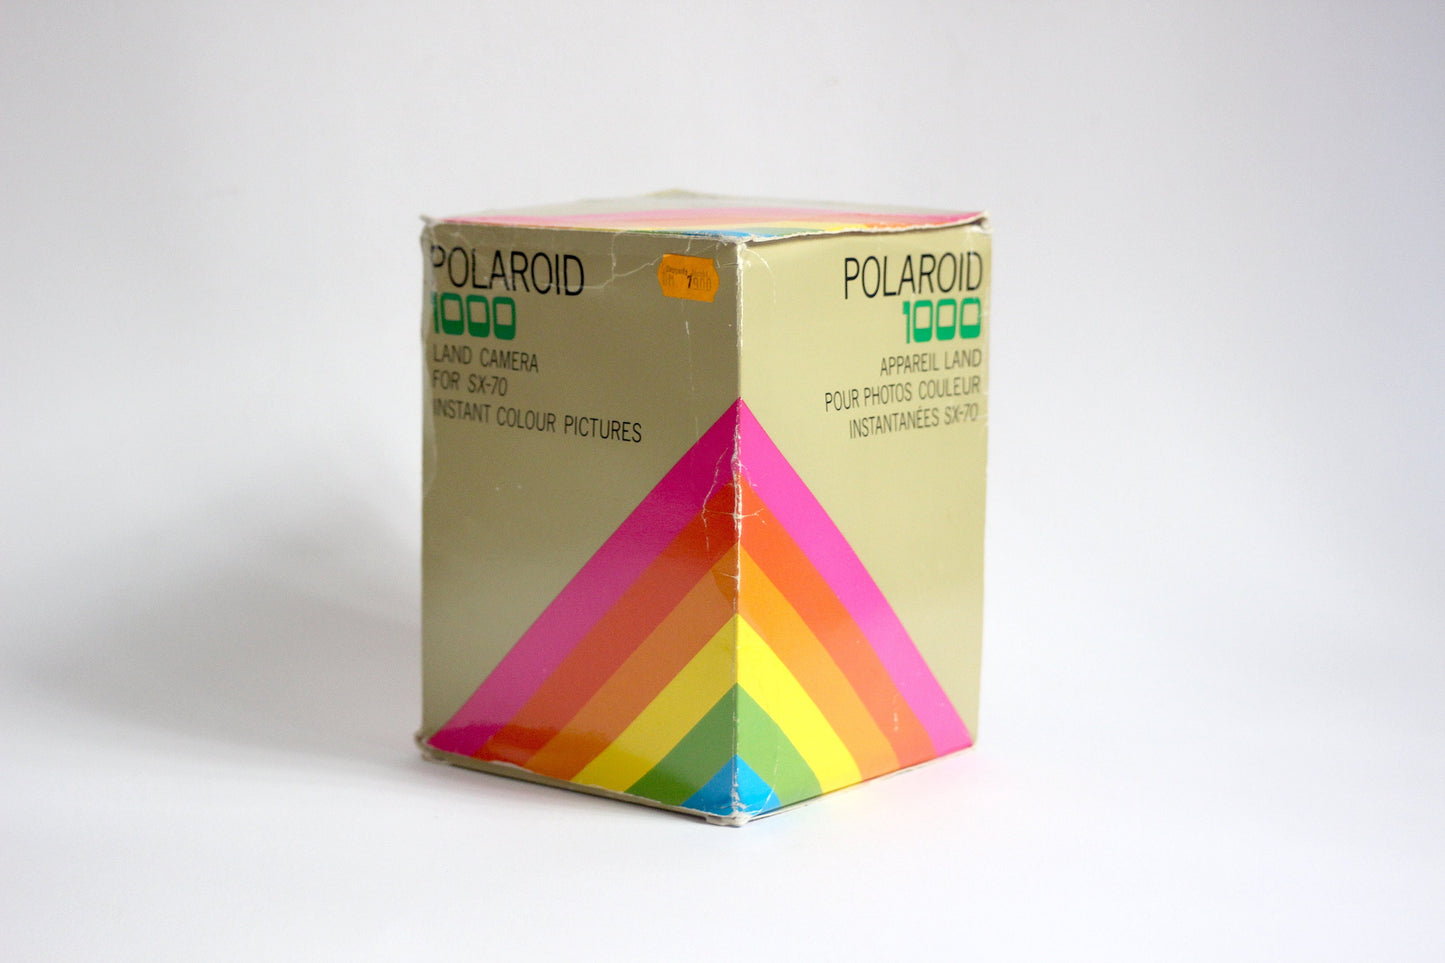 Polaroid 1000 Land Cámera - green shutter button [includes original box and original book instruccions]